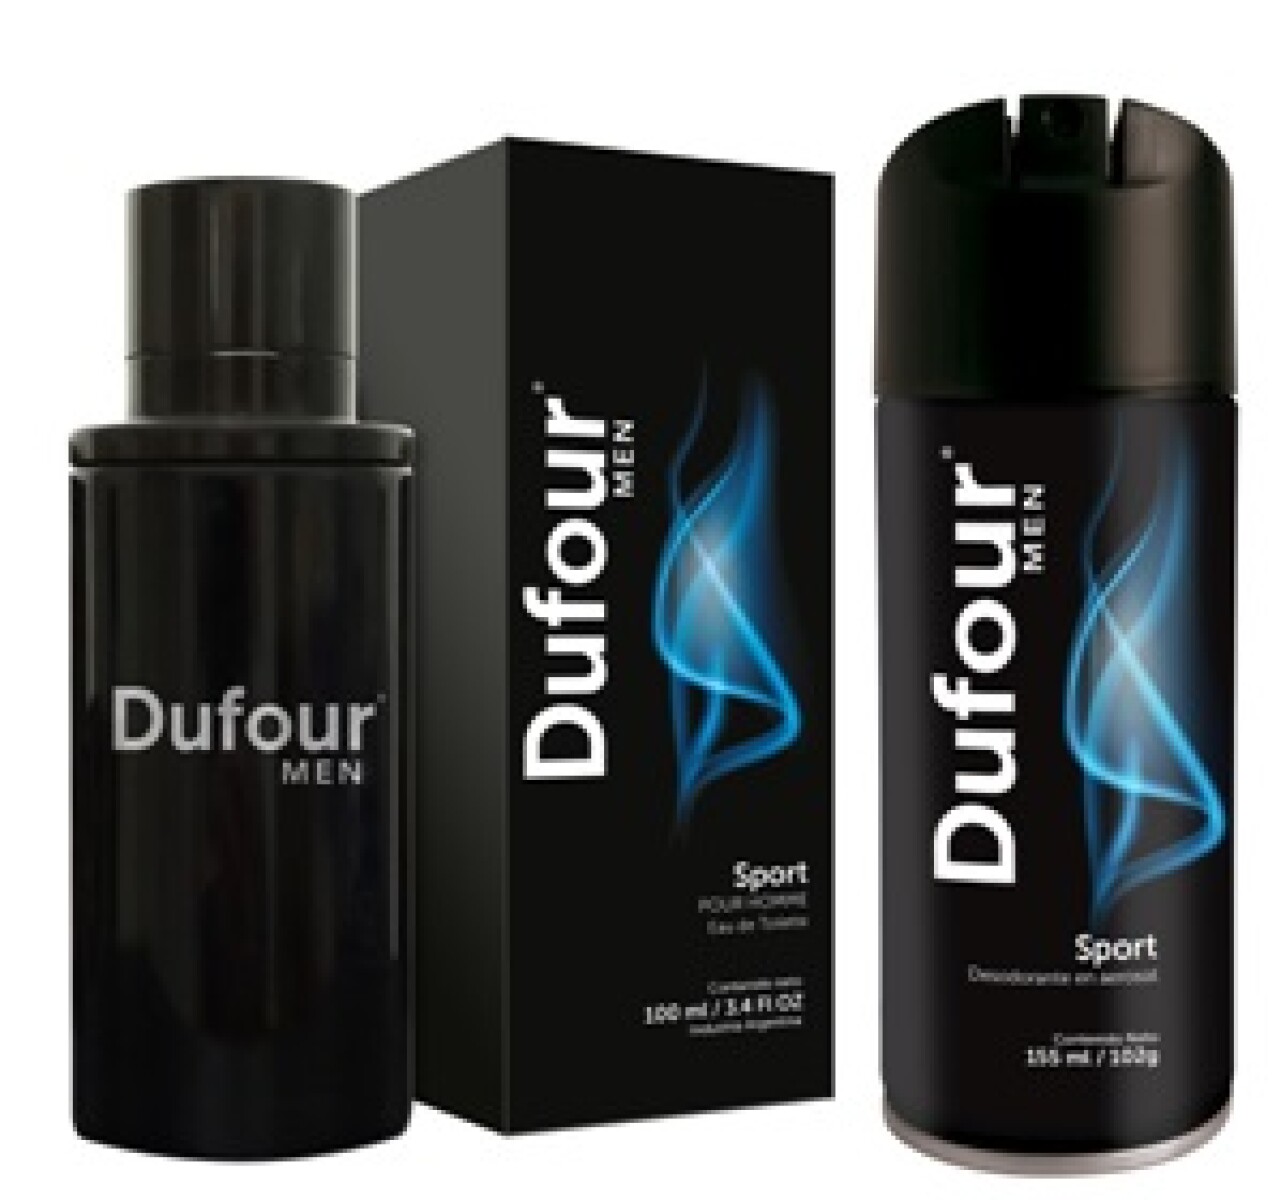 Pack Perfume y Desodorante Dufour Sport - 001 